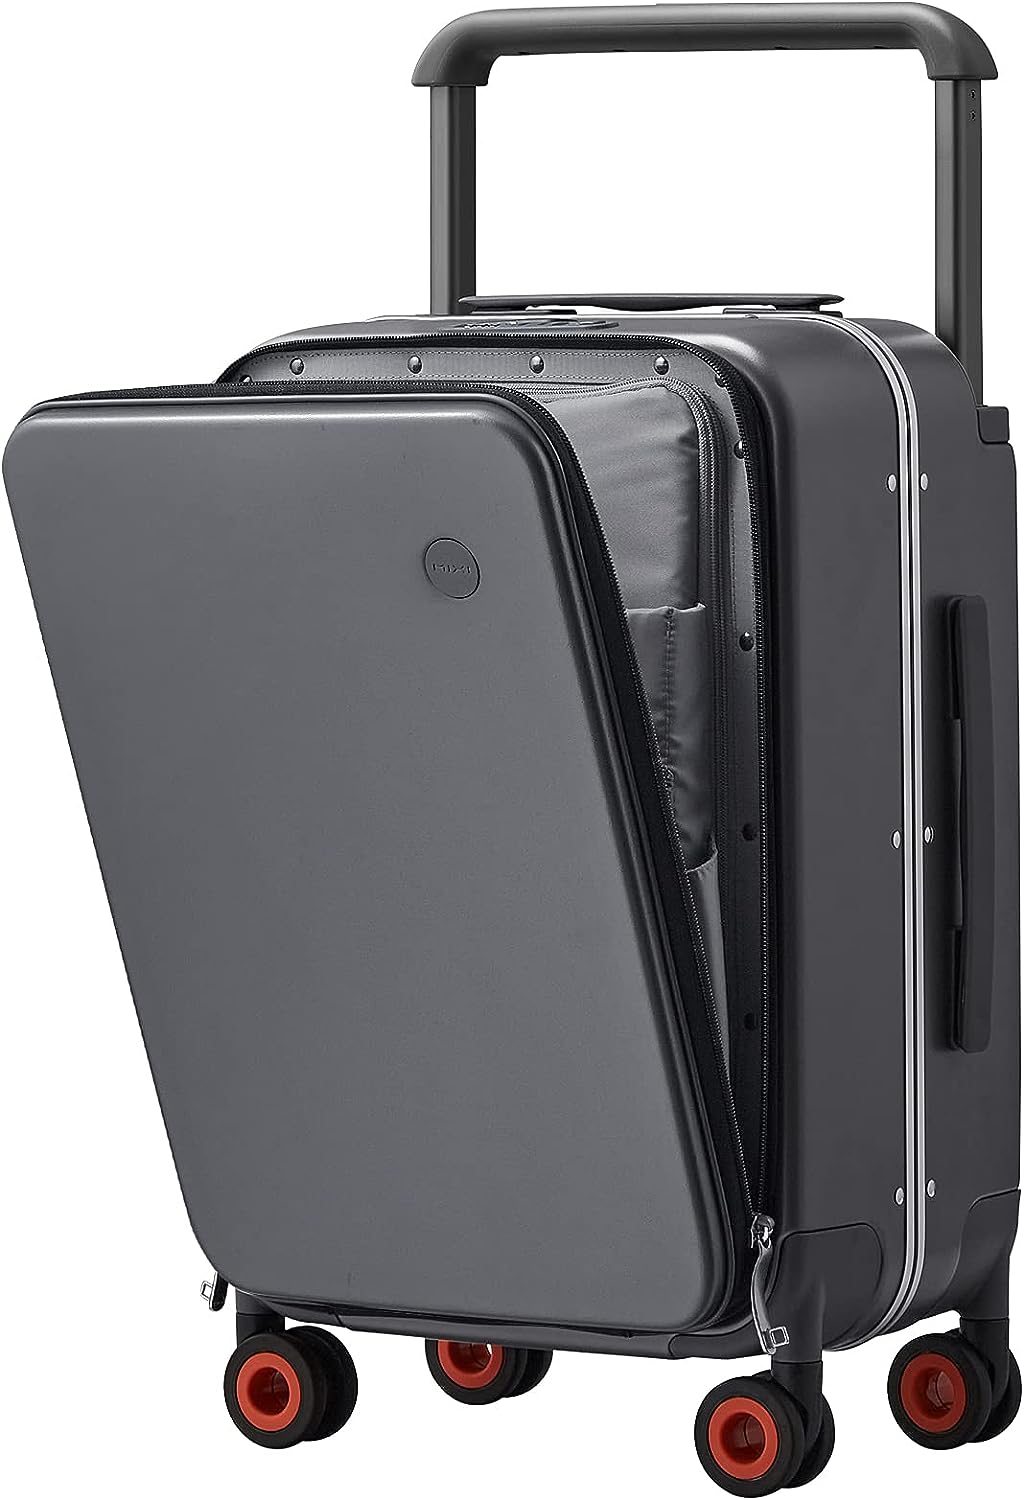  feilario 22 Aluminium Frame Hardside PC Carry on Luggage -  Wide Handle Double Spinner Wheels Suitcase with TSA lock